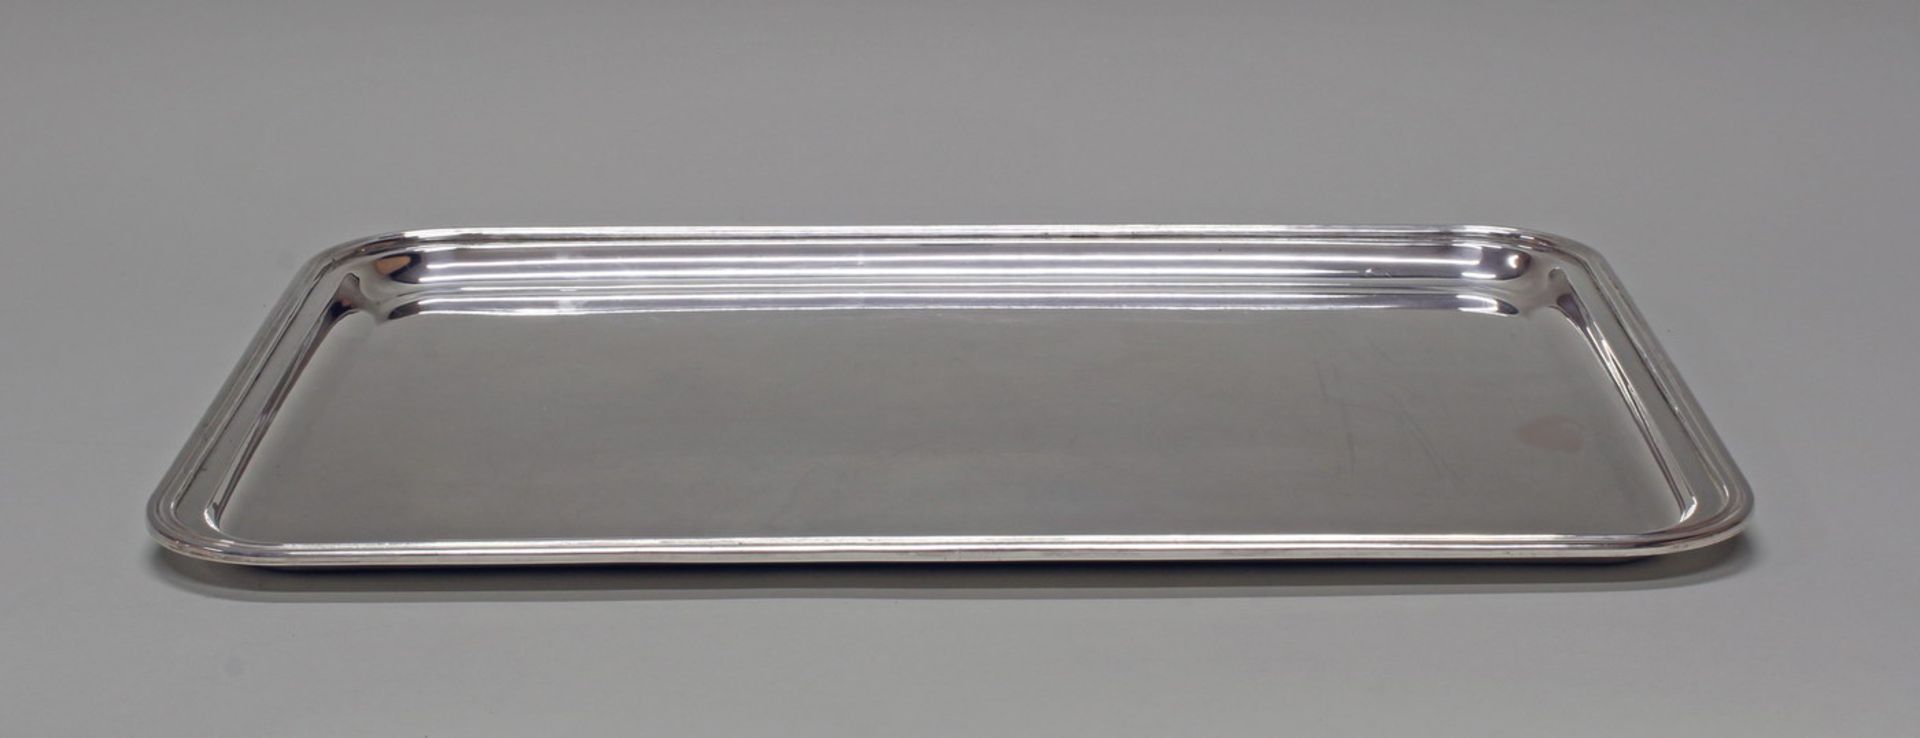 Tablett, Silber 800, Italien, rechteckig, glatt, profilierter Rand, 50.8 x 35.5 cm, ca. 1.850 g, - Image 2 of 4